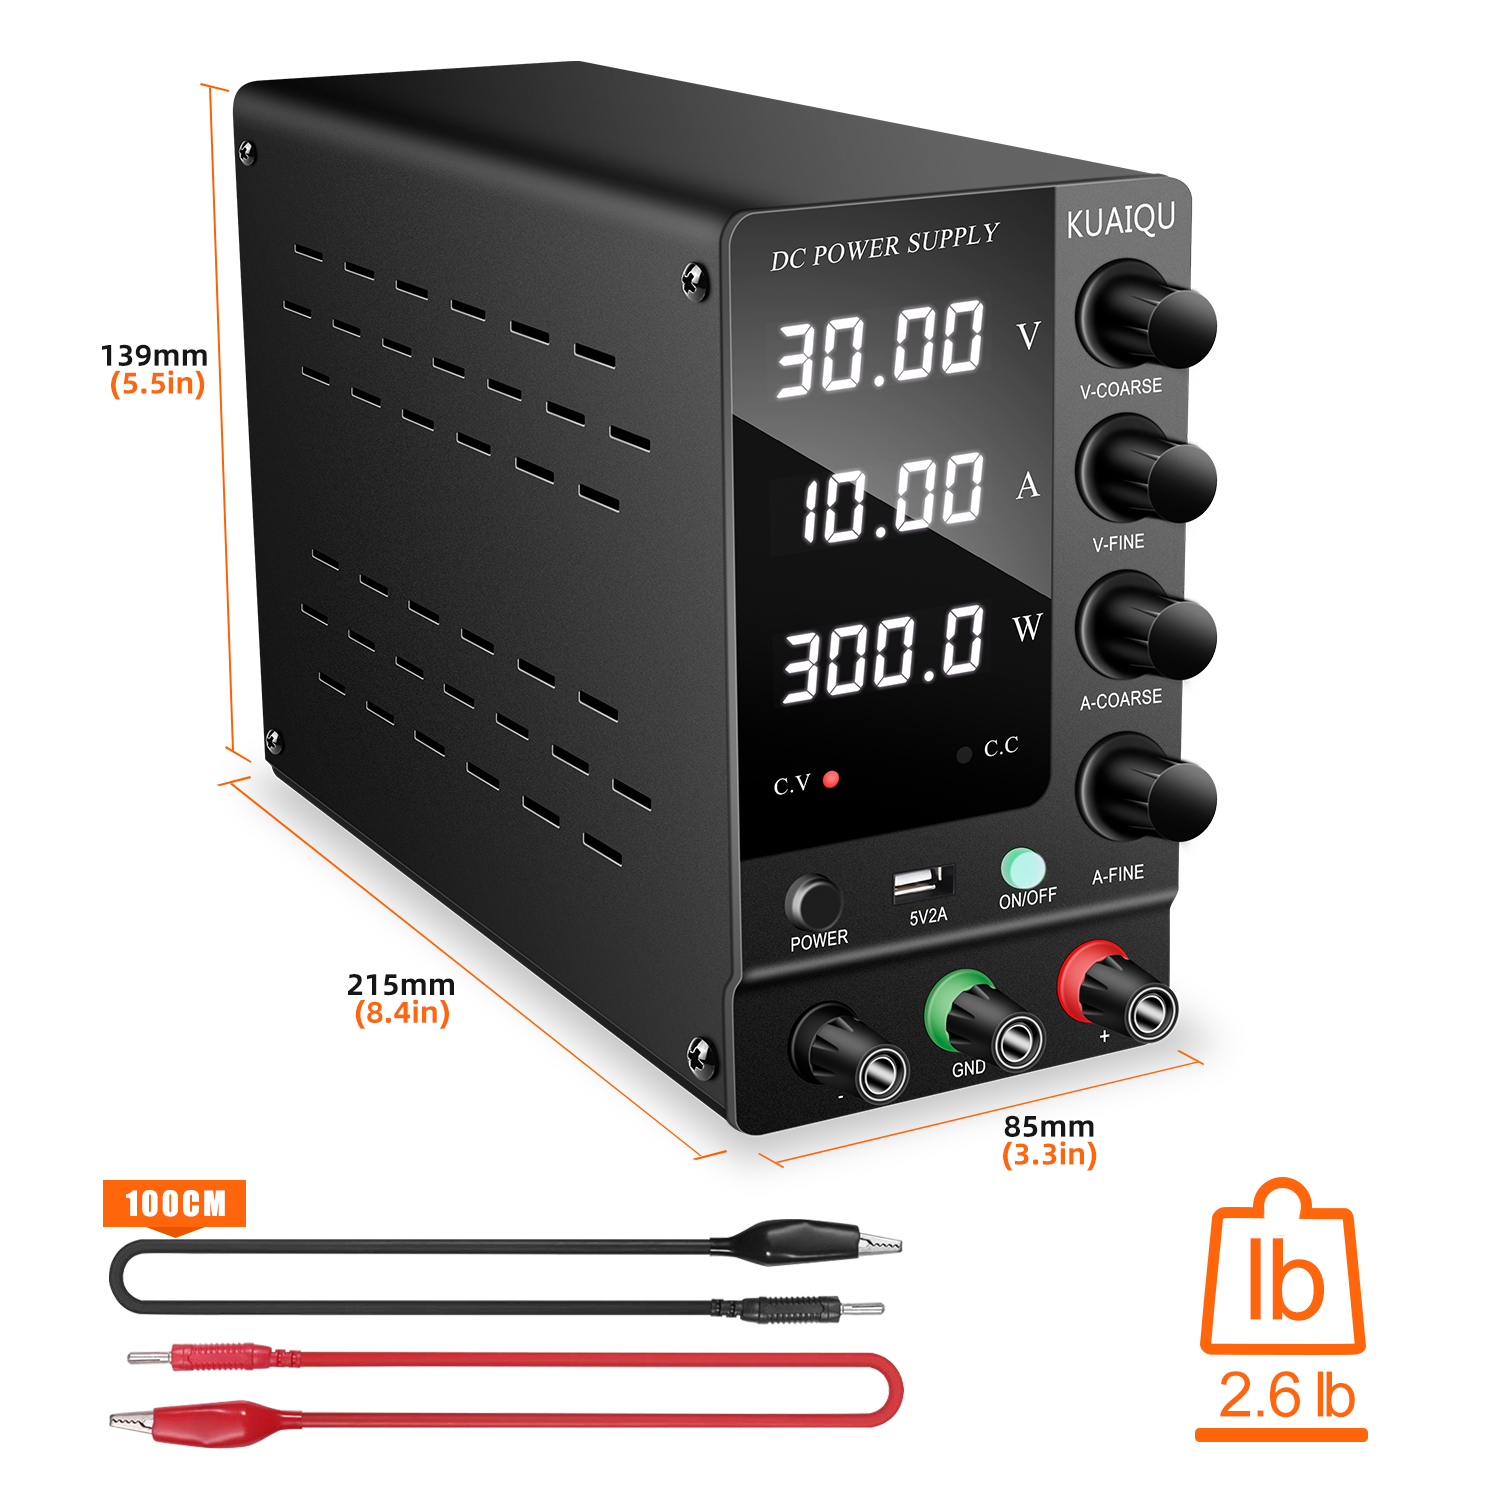 KUAIQU-SPS-C3010-USB-Adjustable-DC-Power-Supply-30V-10A-Laboratory-Lab-Bench-Source-Digital-Voltage--1871078-2